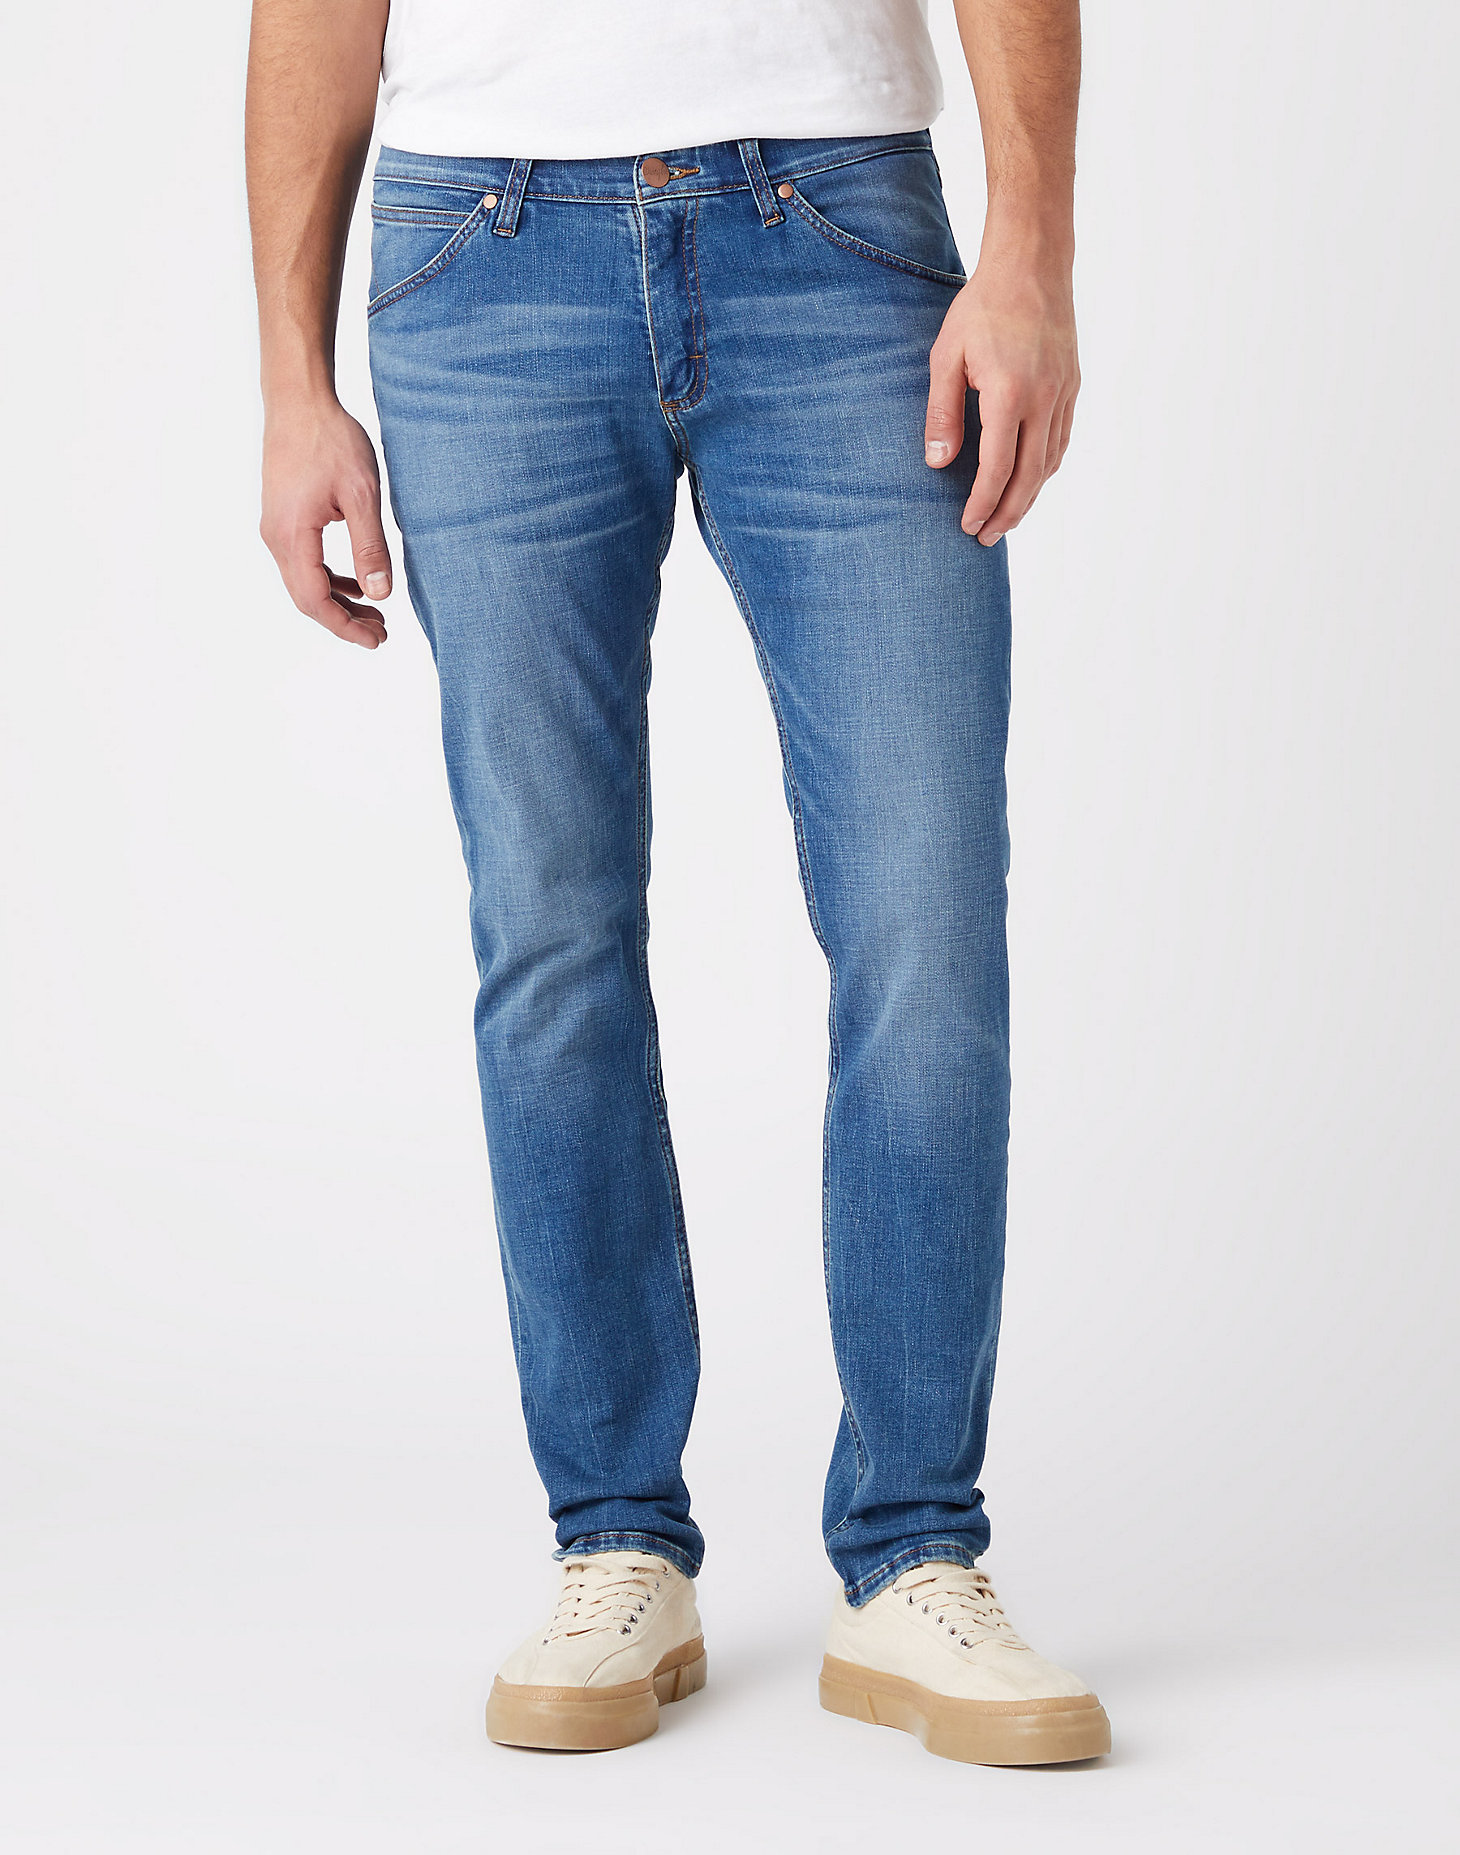 Bryson Jeans in Mid Indigo main view